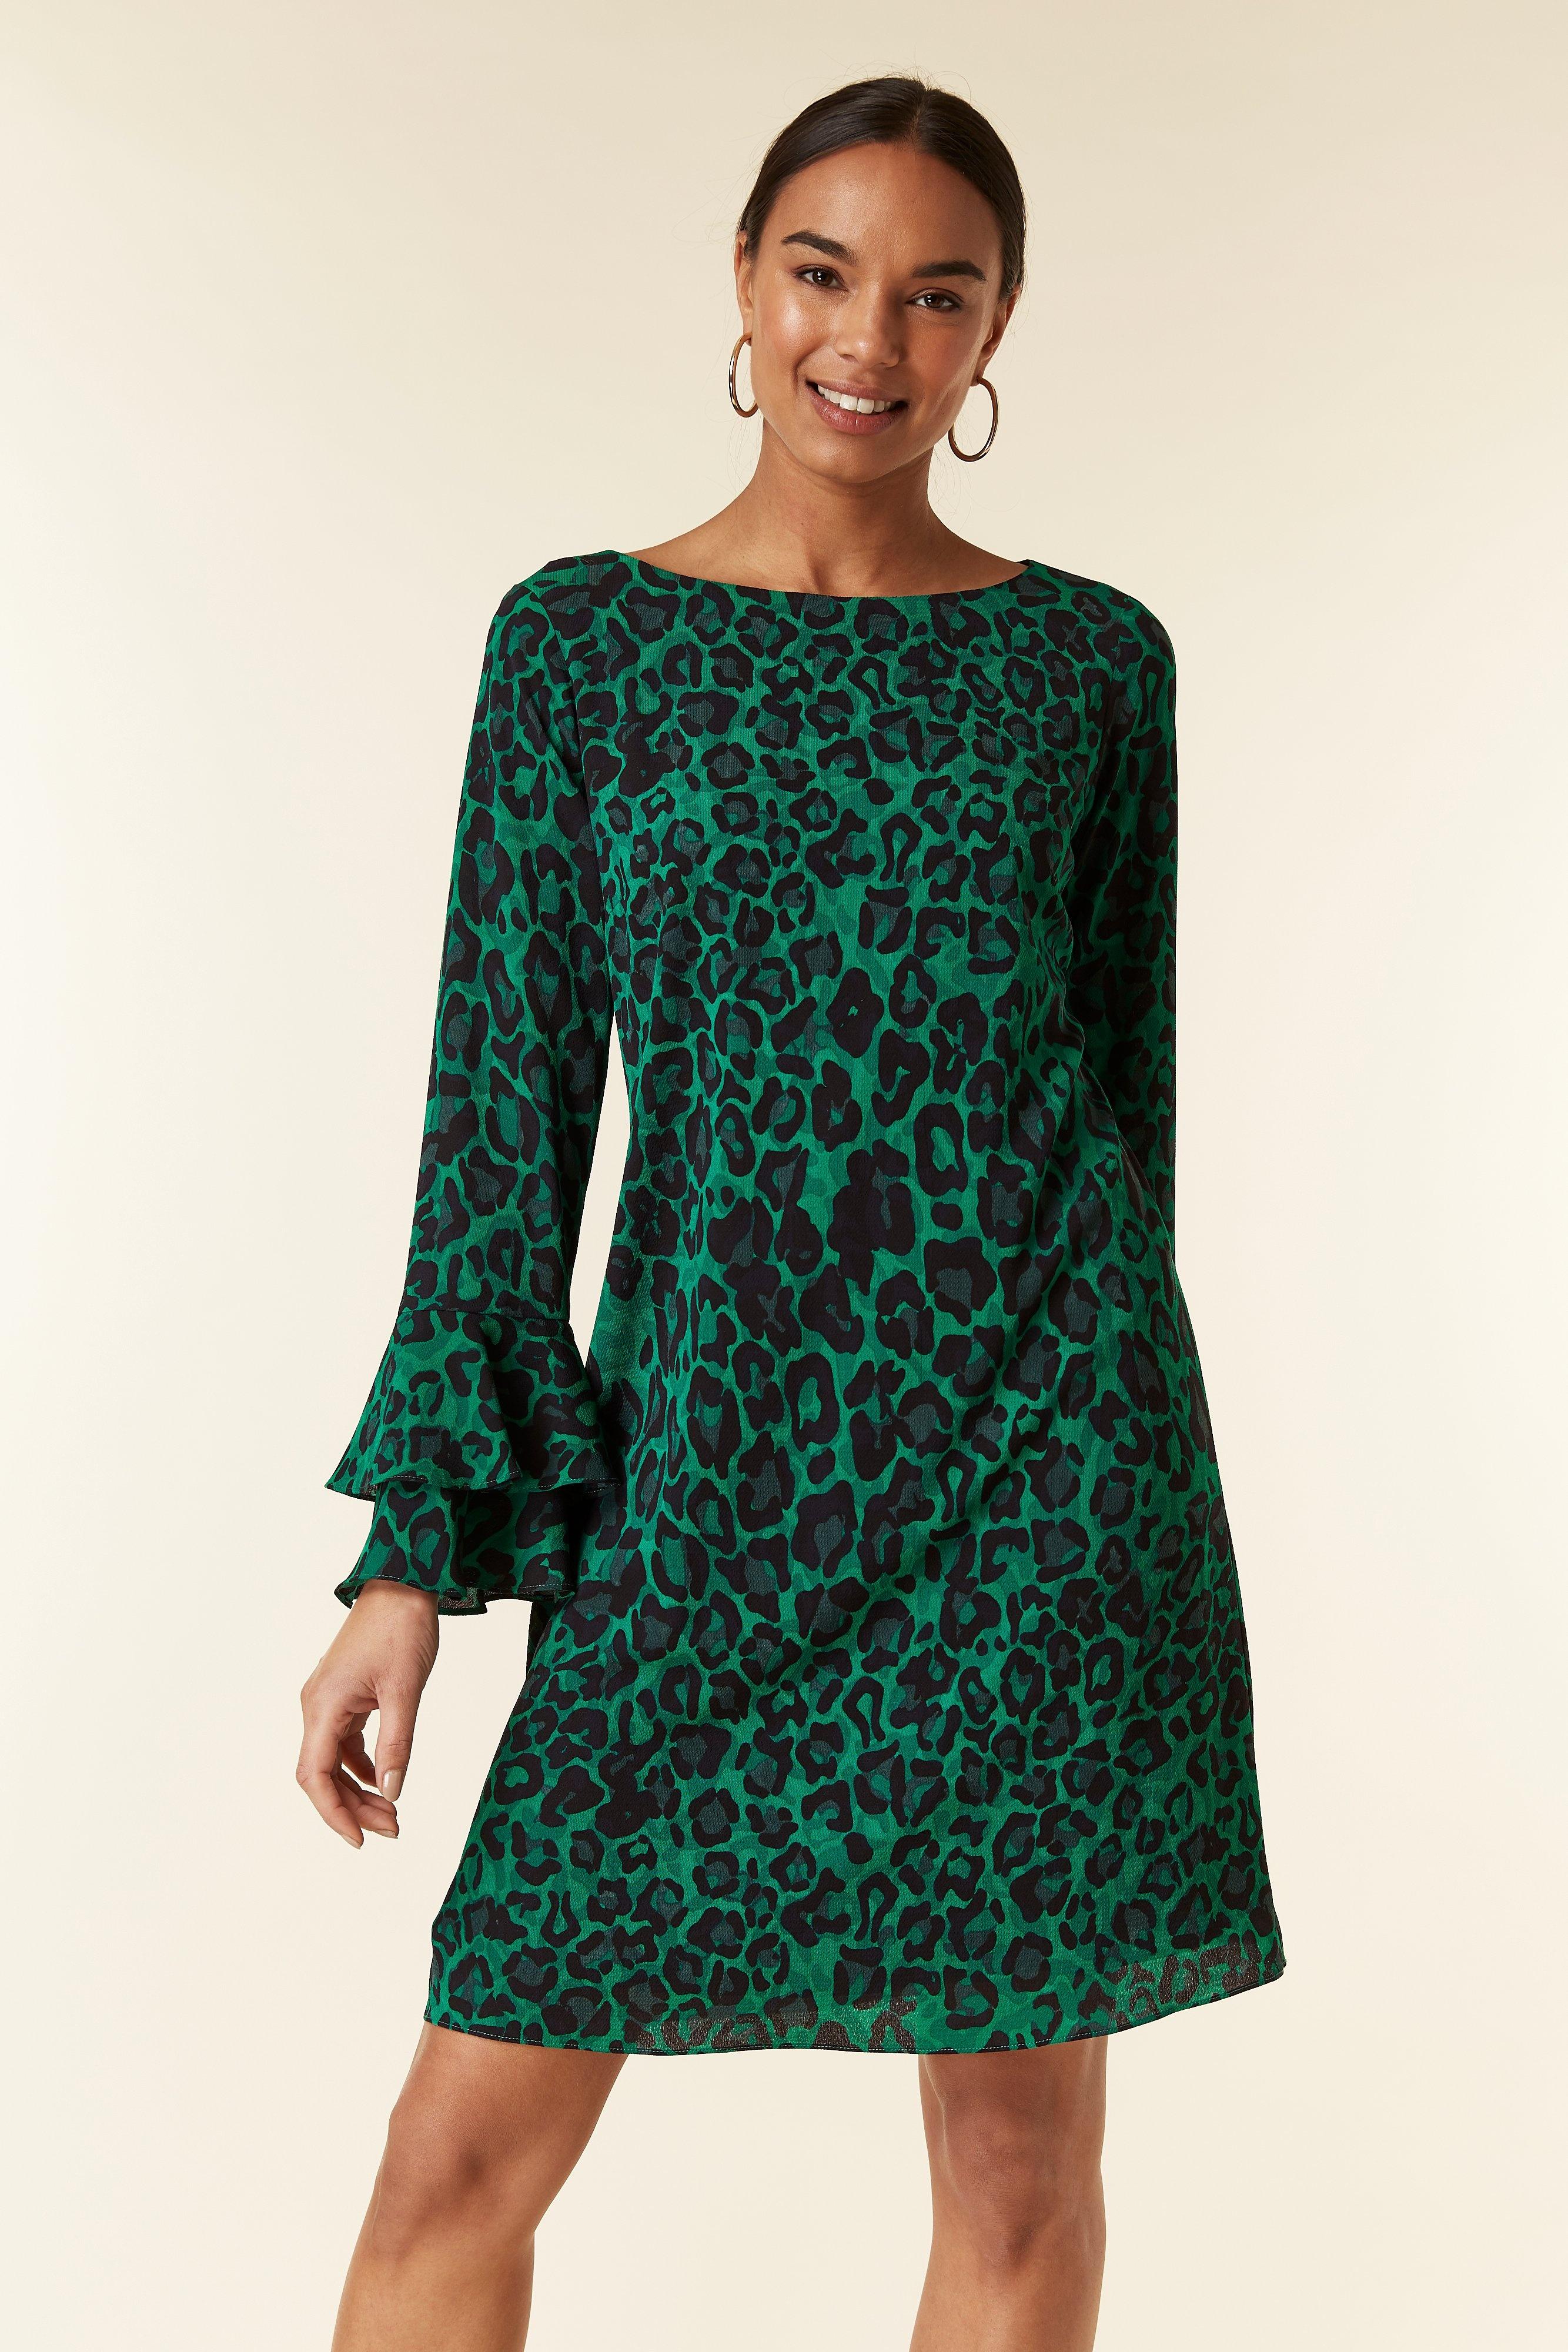 Wallis Green Animal Print Dress Top ...